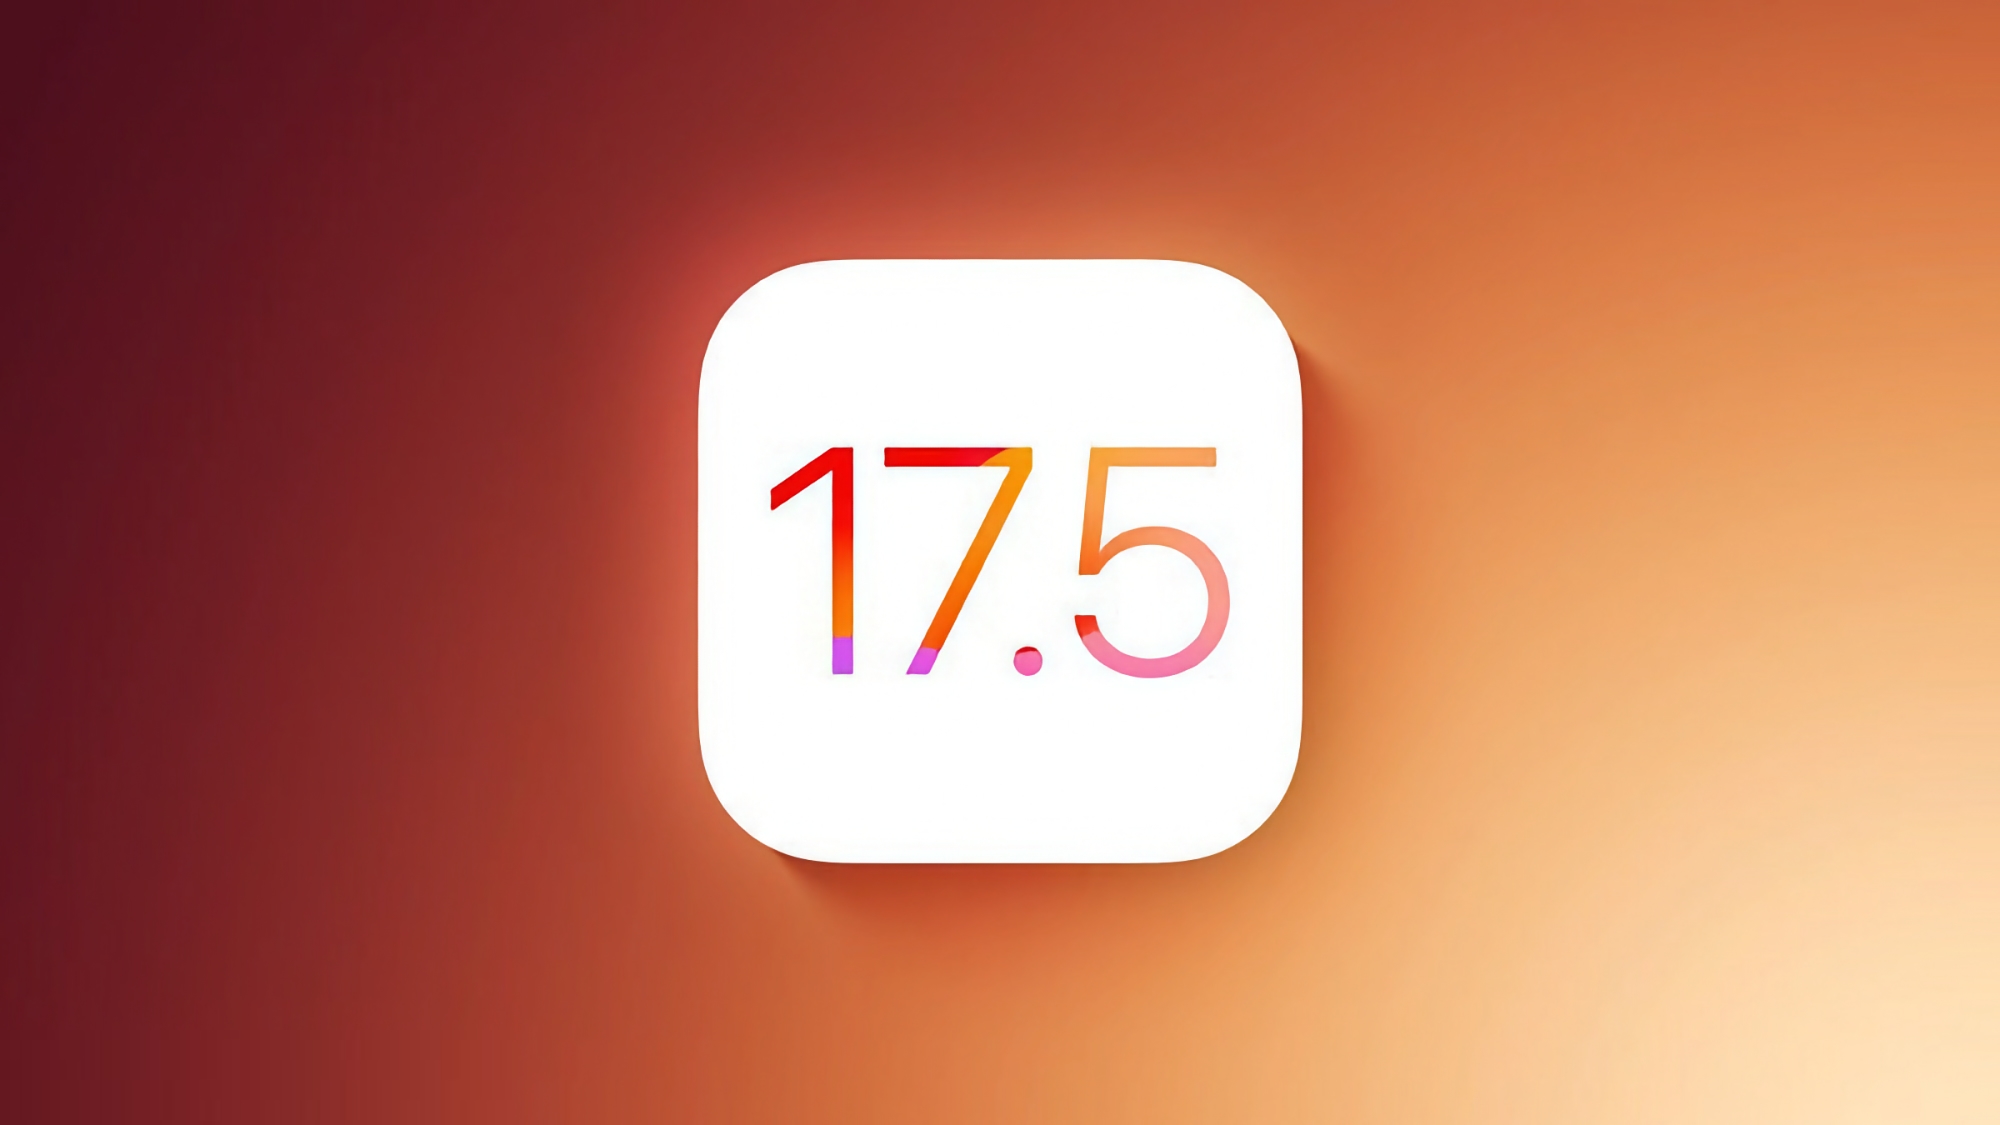 Apple has started testing iOS 17.5 Beta 4 and iPadOS 17.5 Beta 4